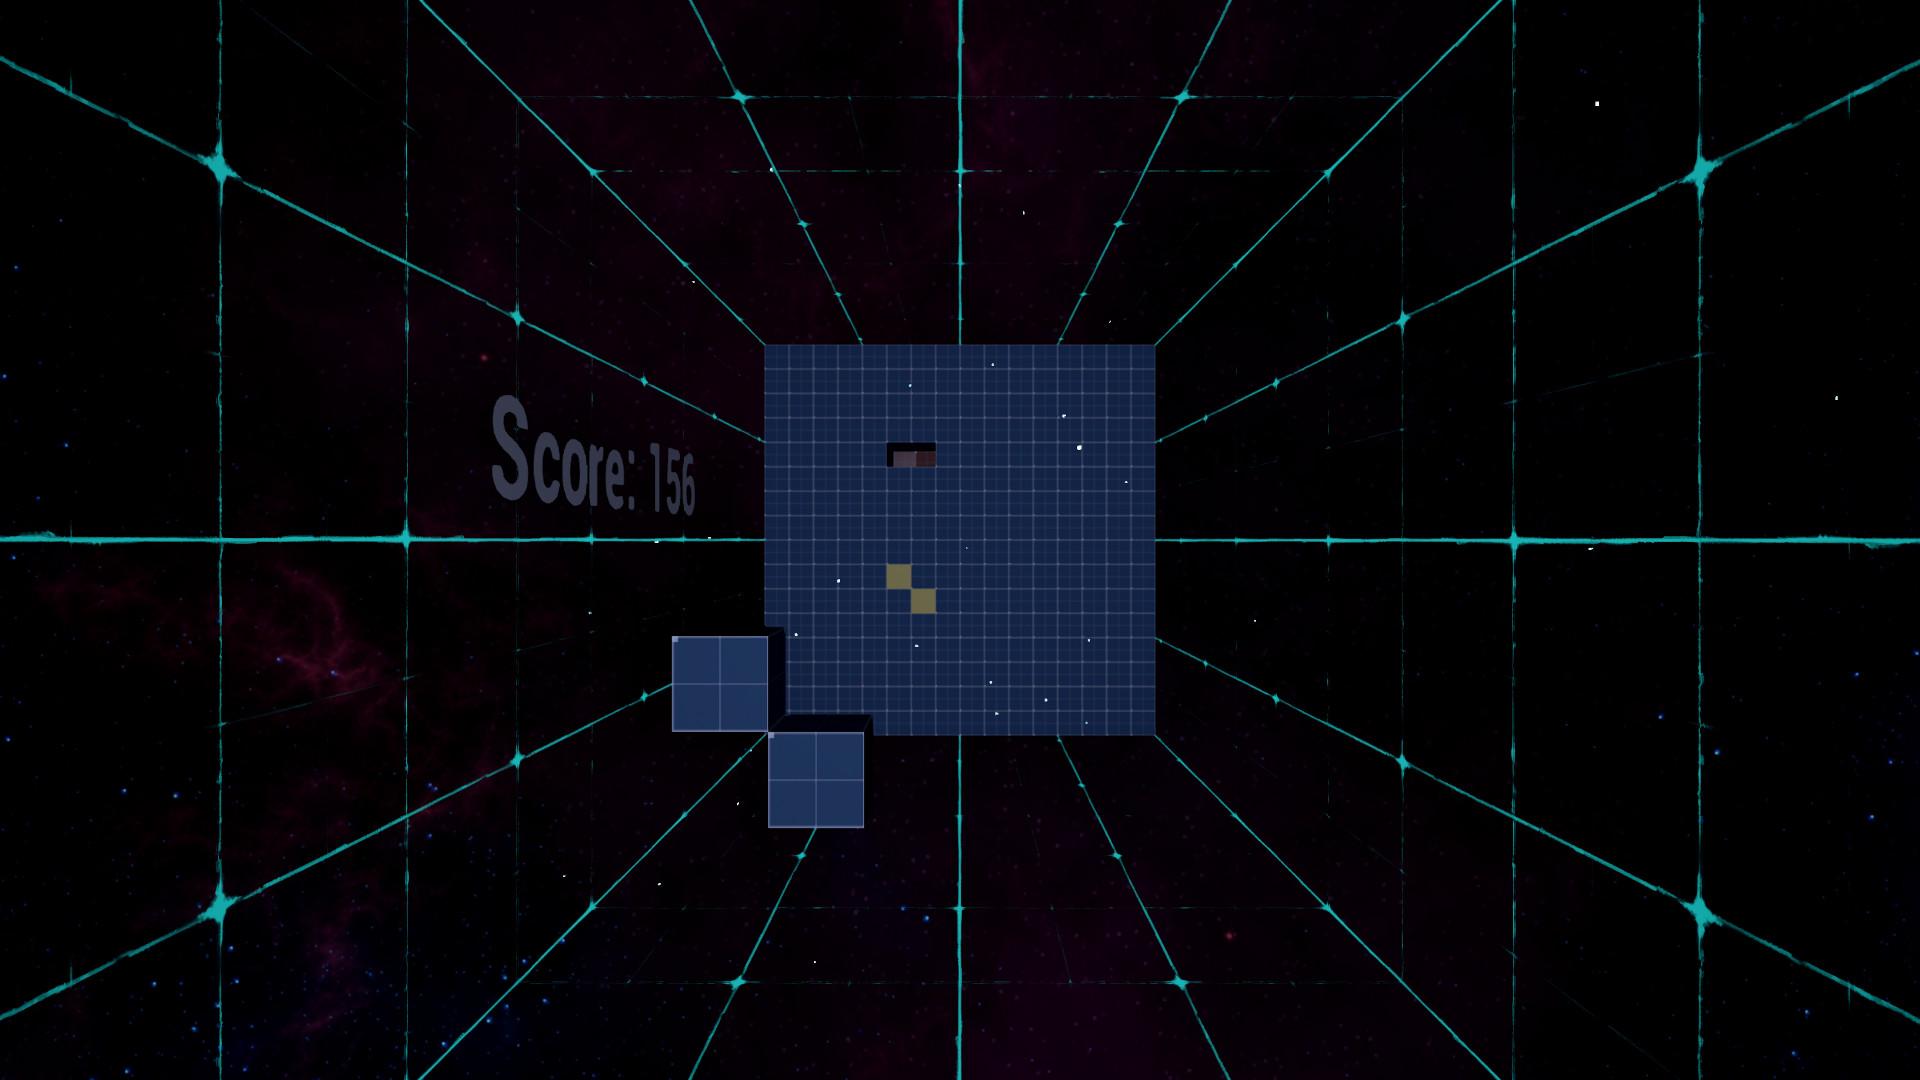 Screenshot №5 from game ThrounnelVR